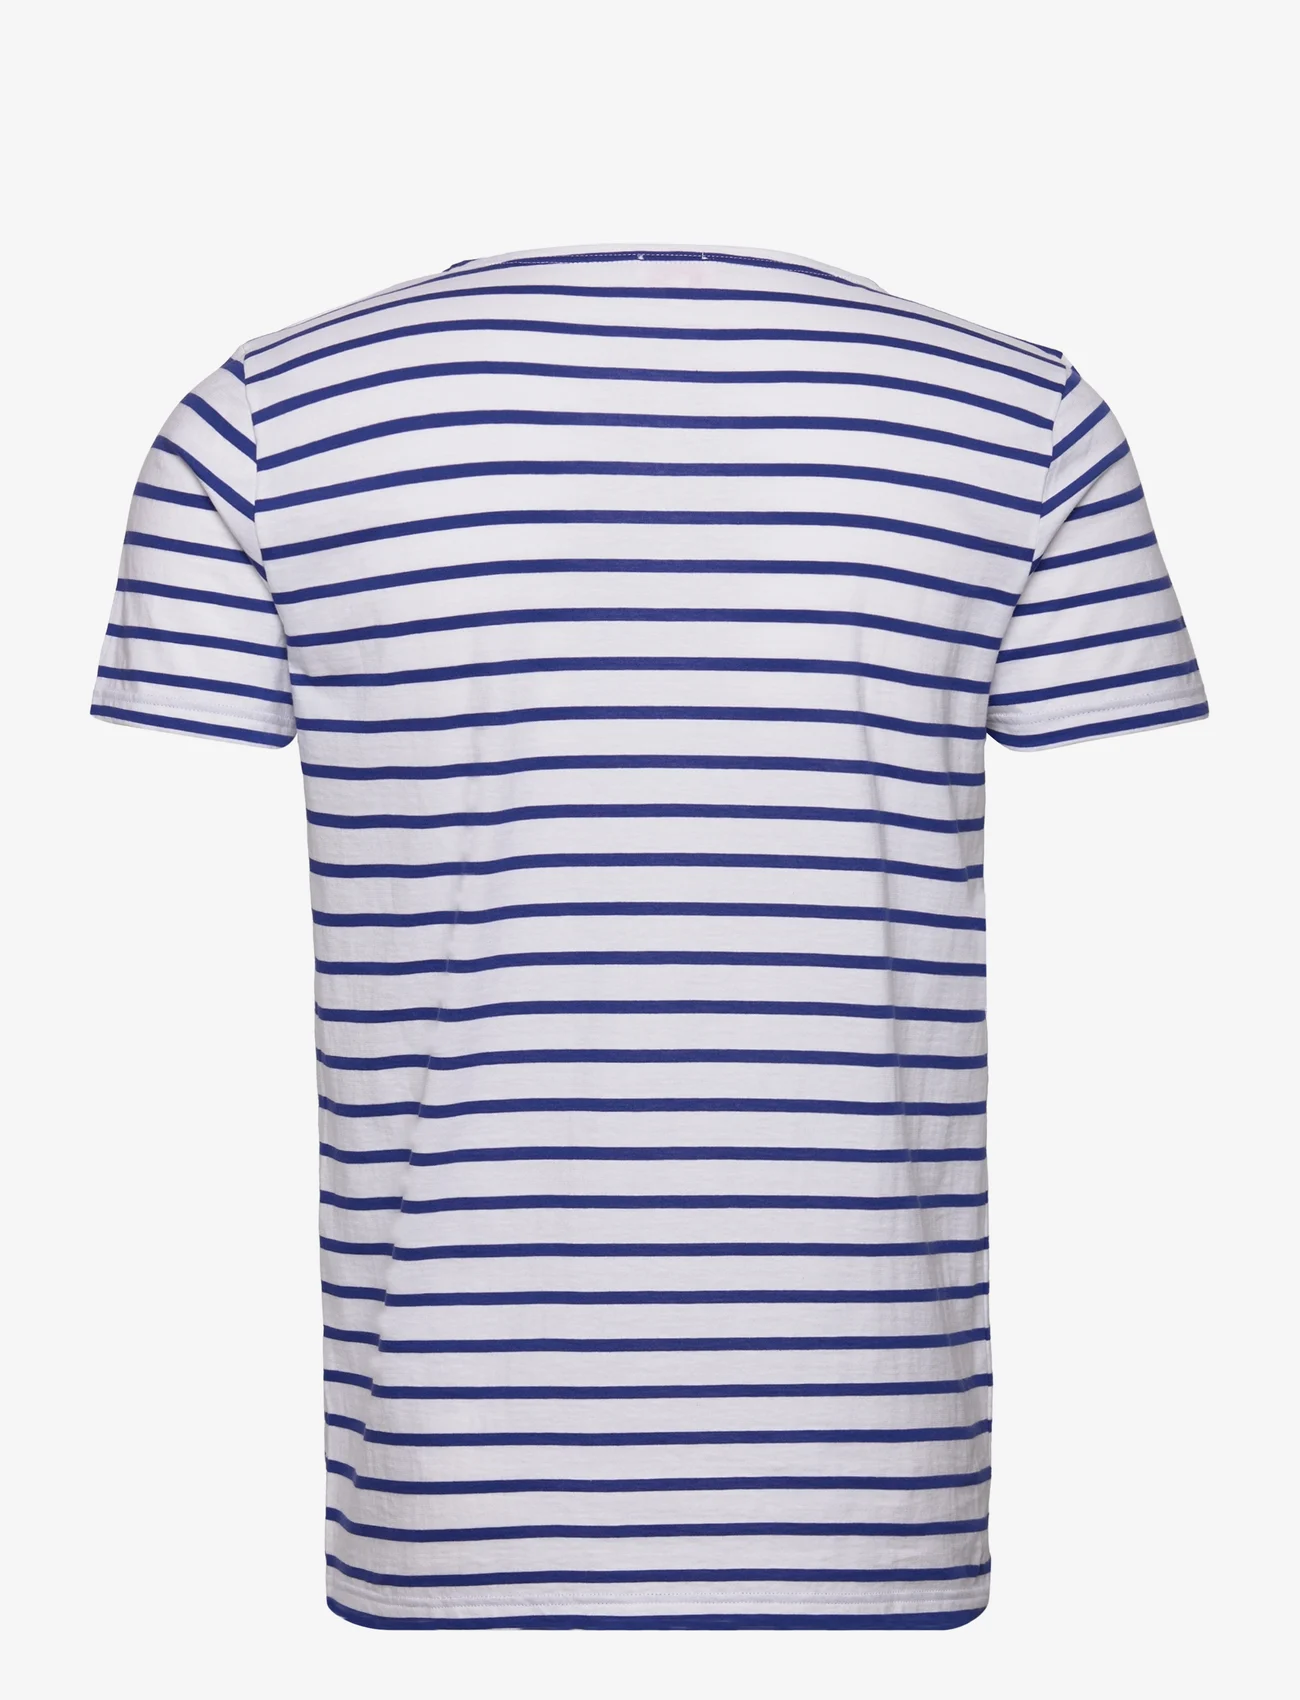 Armor Lux - Breton Striped Shirt Héritage - kortærmede t-shirts - blanc/etoile - 1